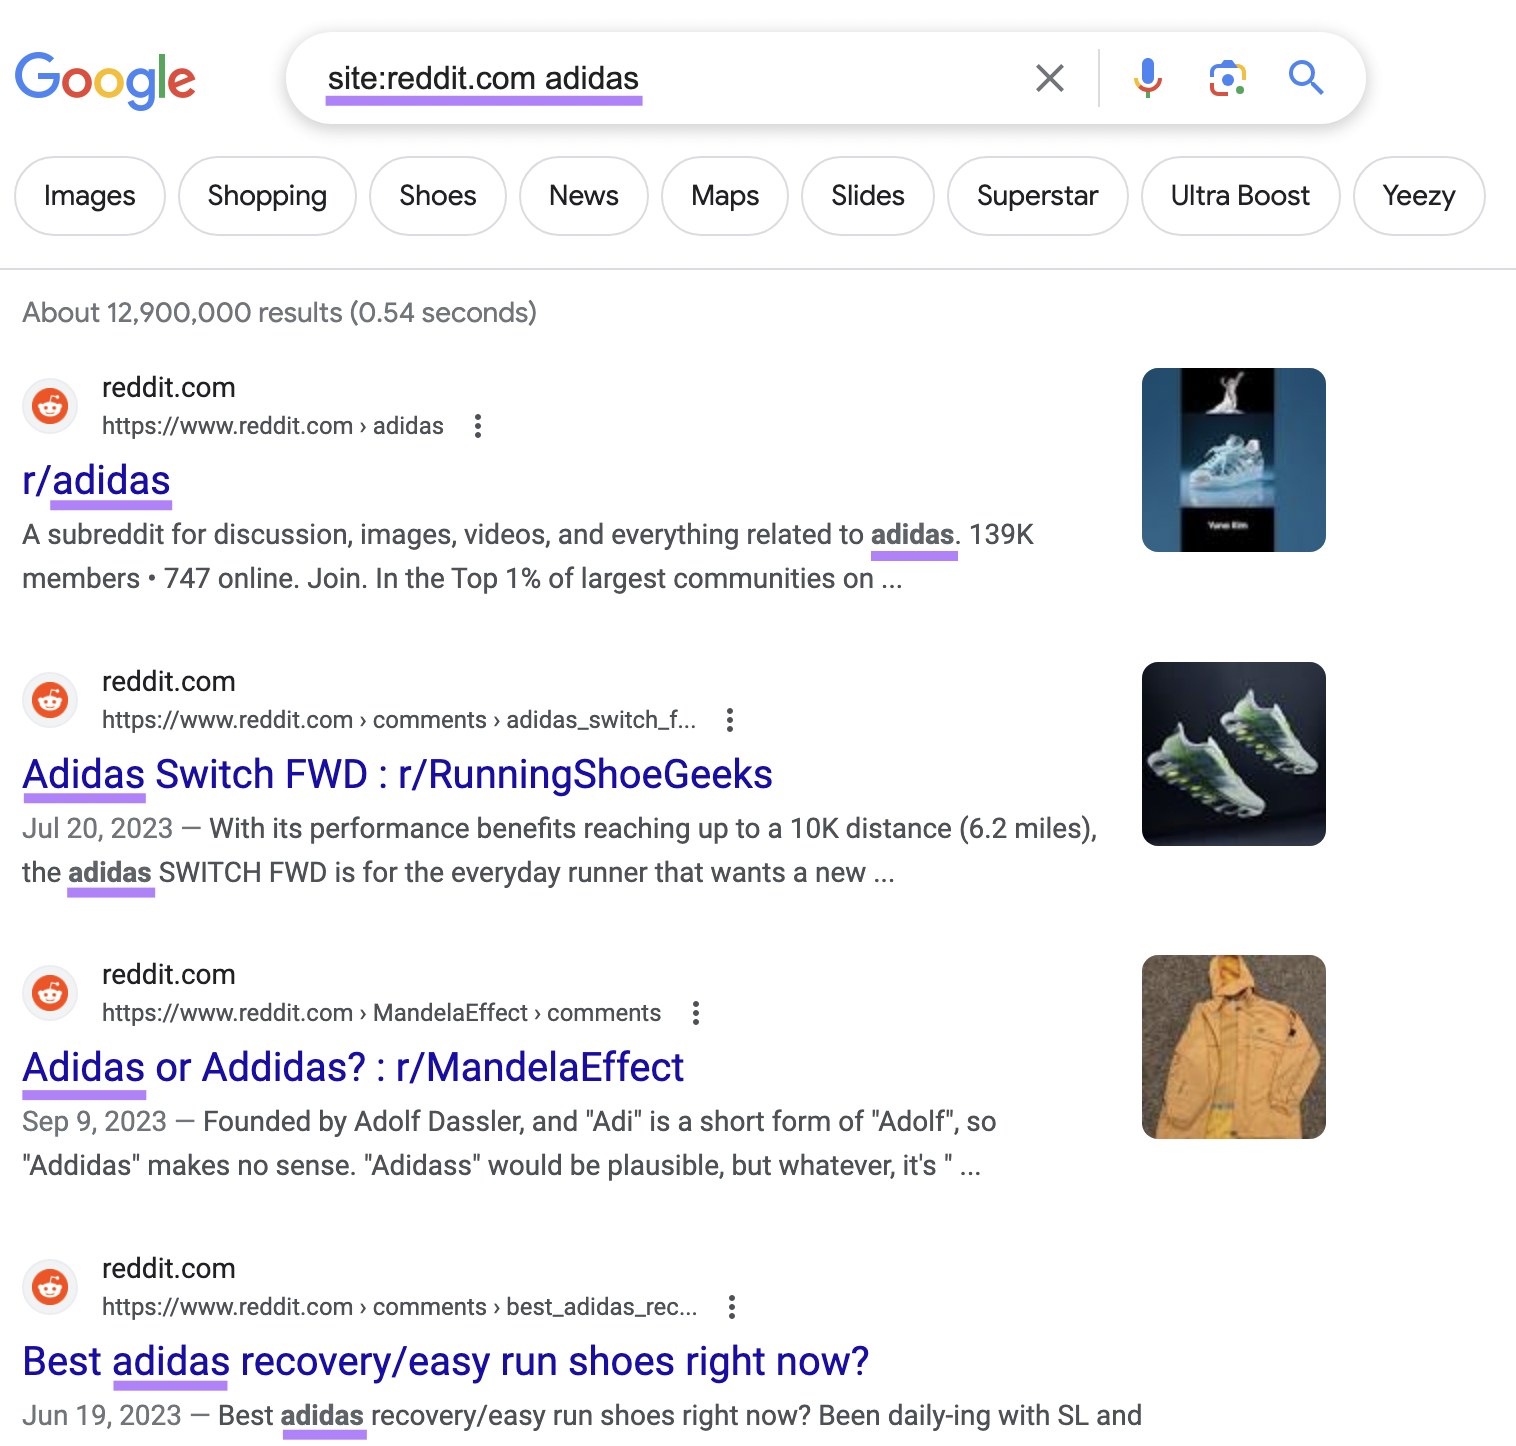 Google's SERP for “site:reddit.com adidas"